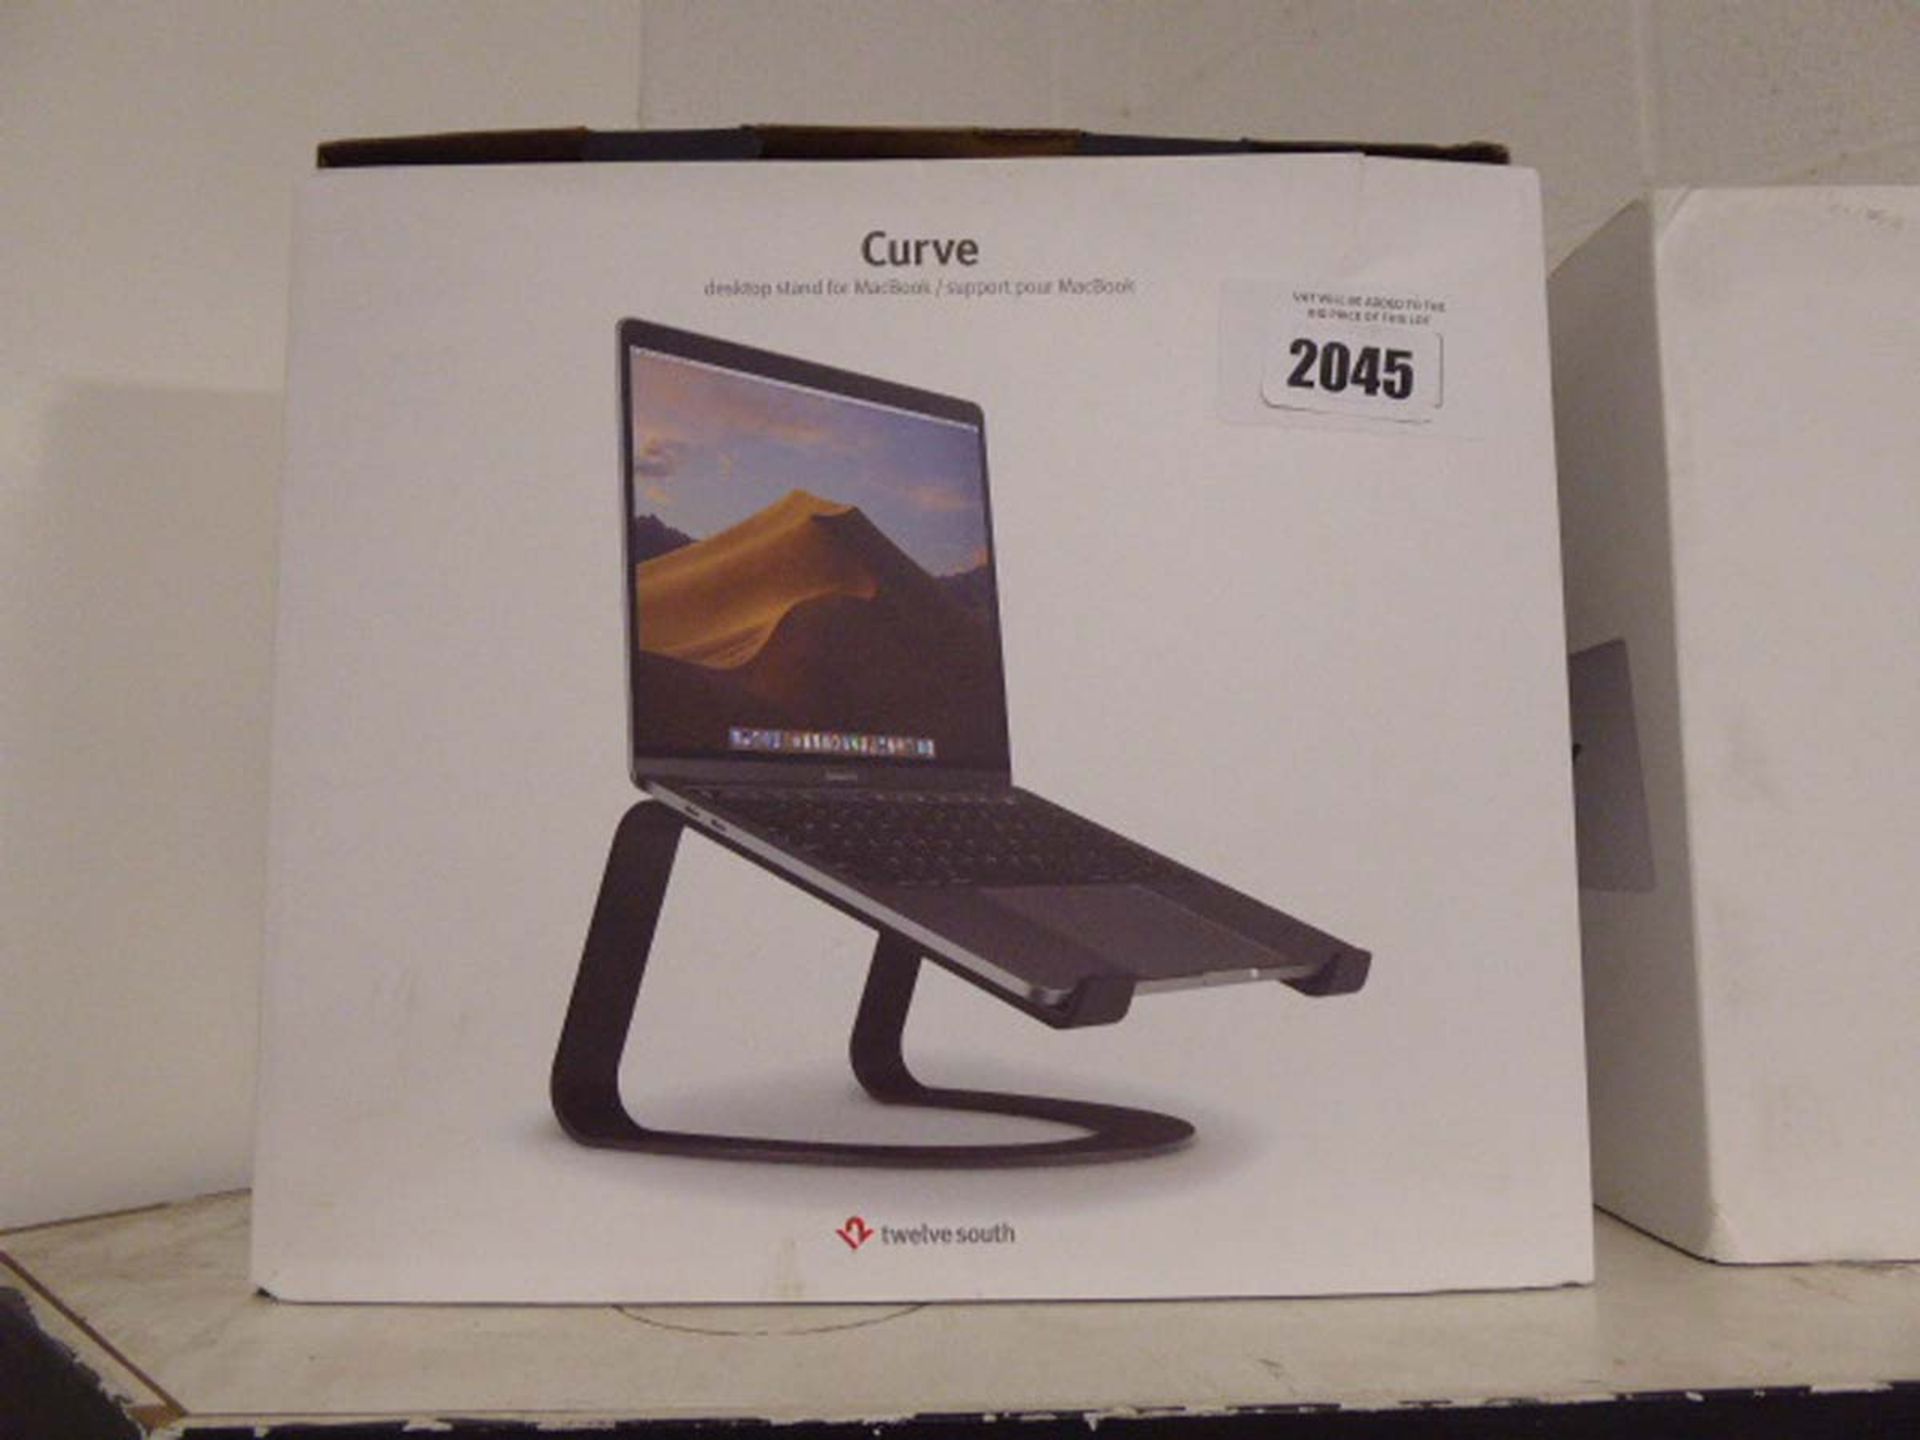 Curved desktop stand for Macbook